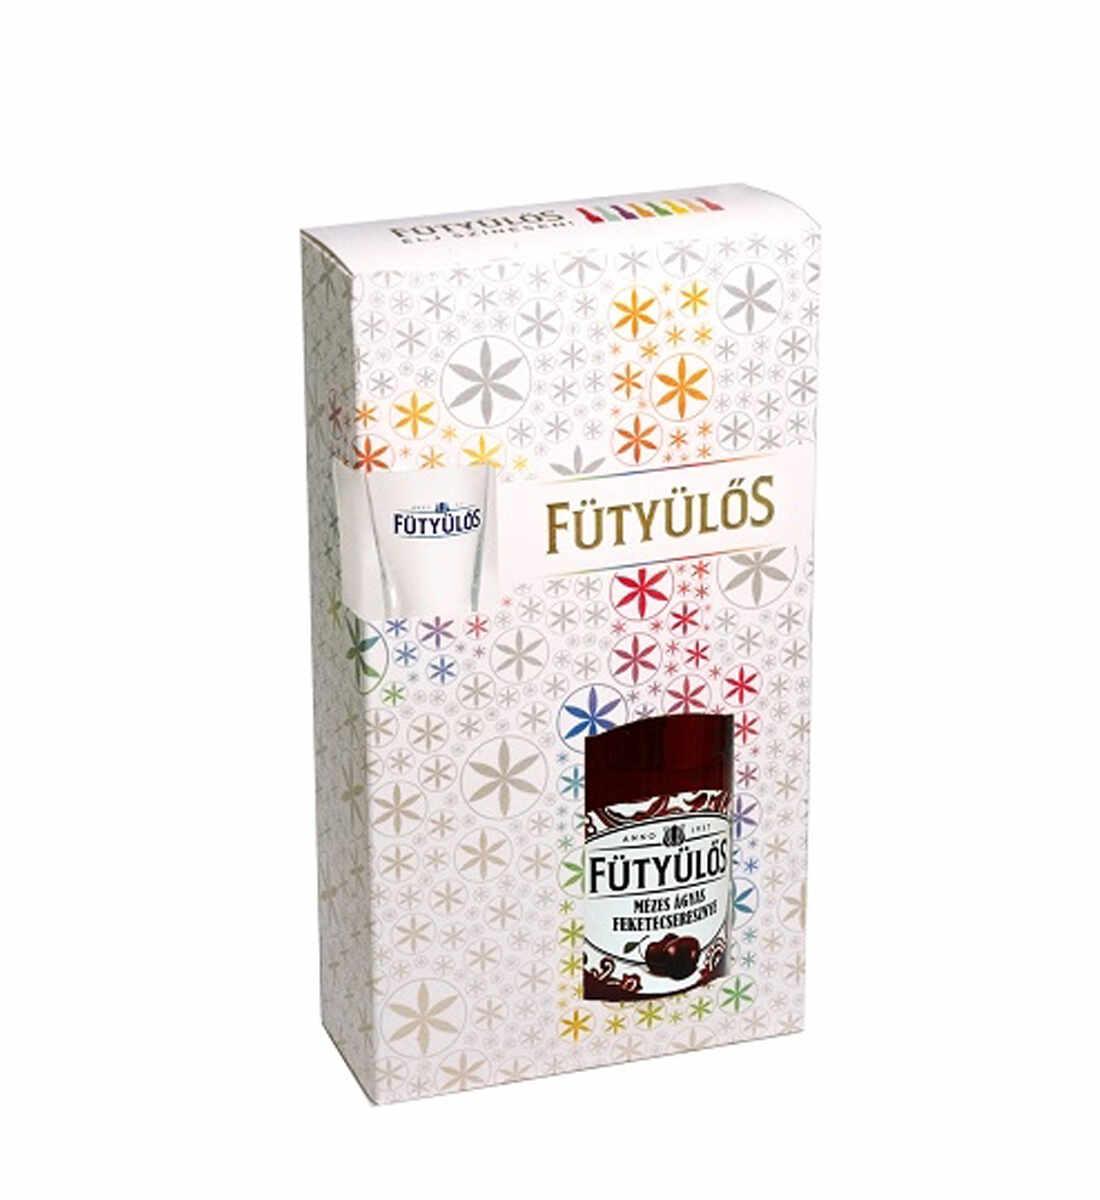 Futyulos Plum Honey Gift Set 0.5L